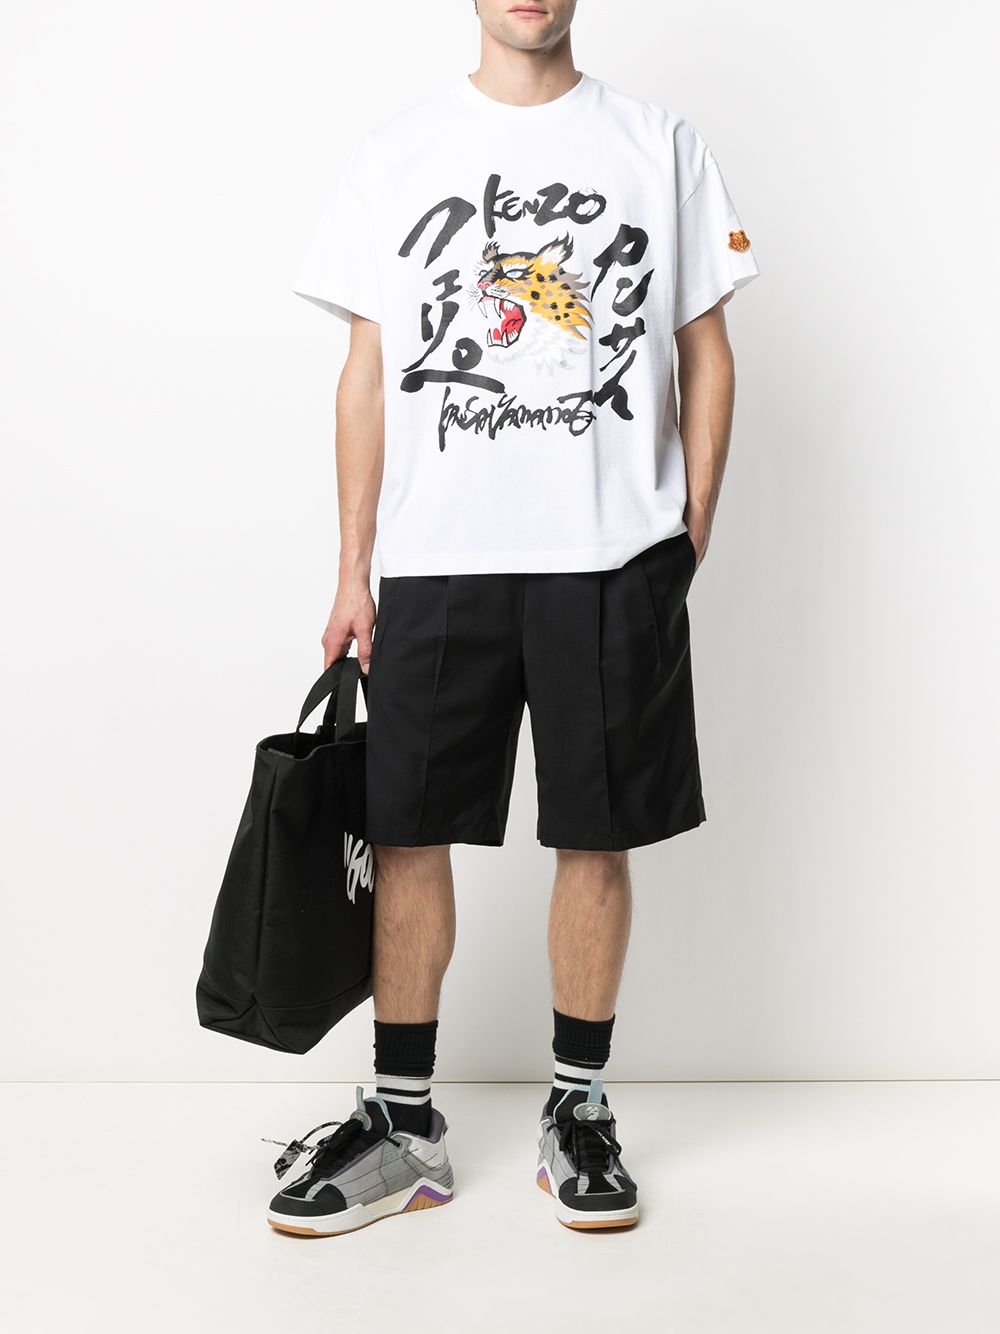 Kenzo x Kansai Yamamoto Cheetah Print Sweatshirt - Farfetch